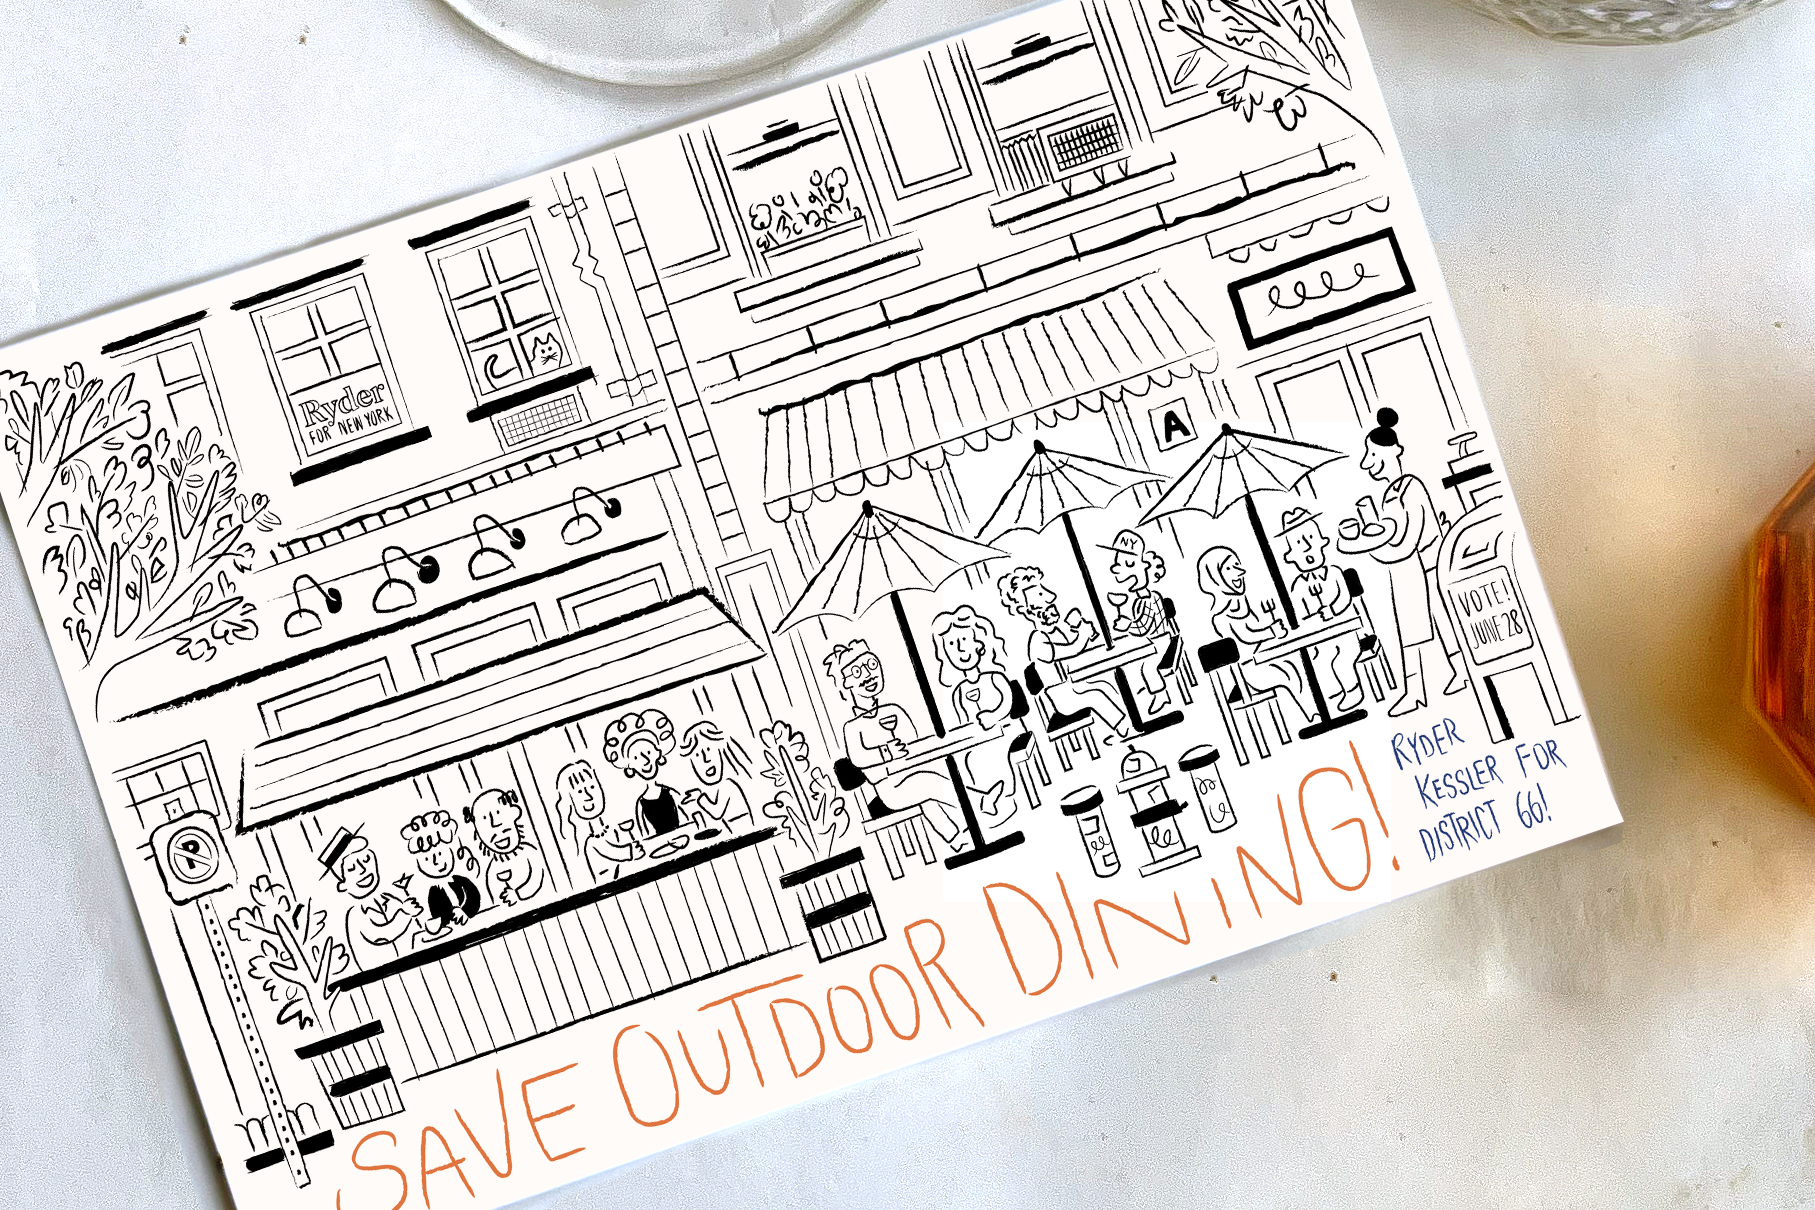 Save Outdoor Dining Postcard